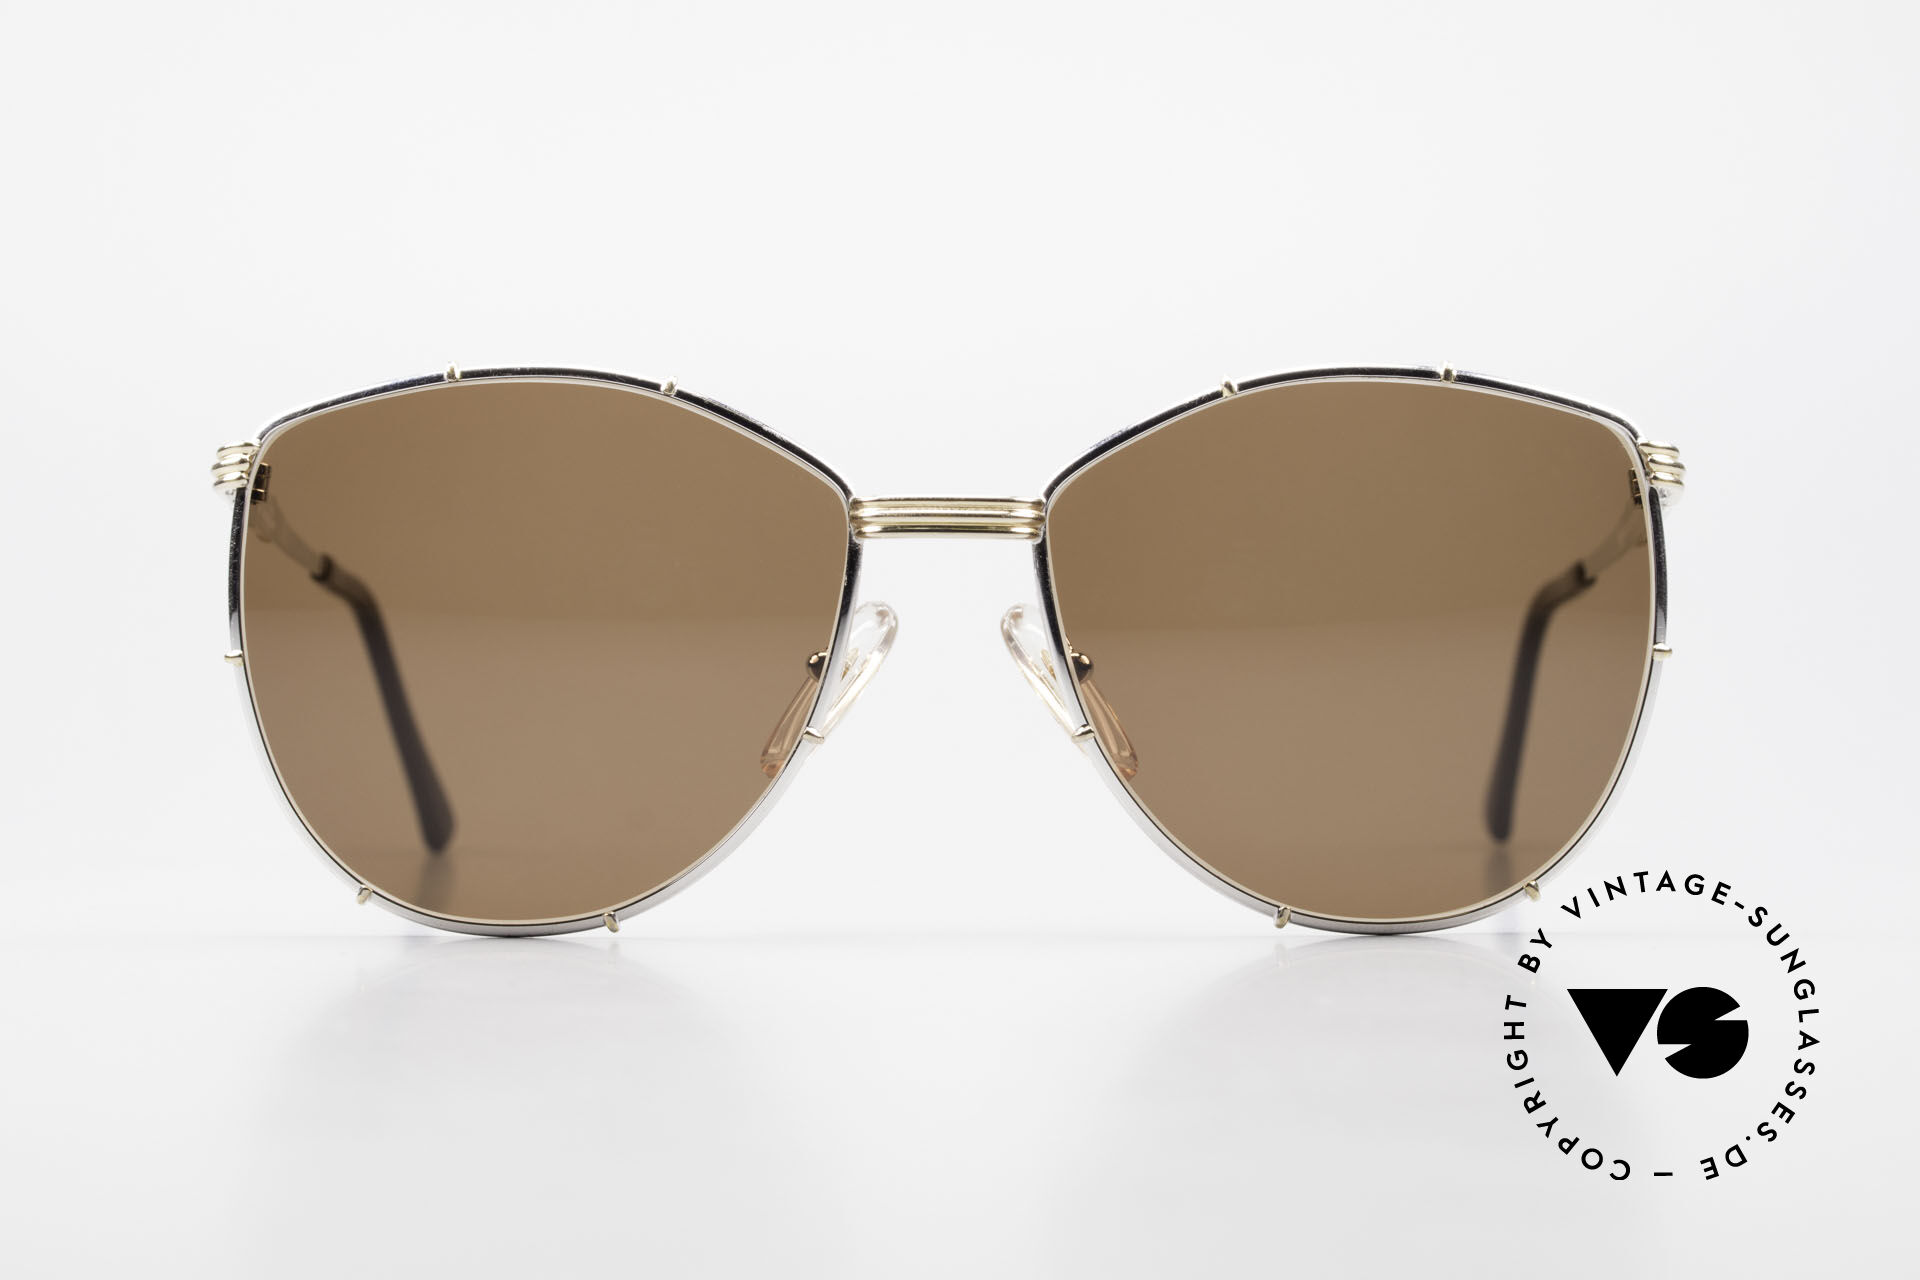 Sunglasses Christian Dior 2472 80's Vintage Designer Shades